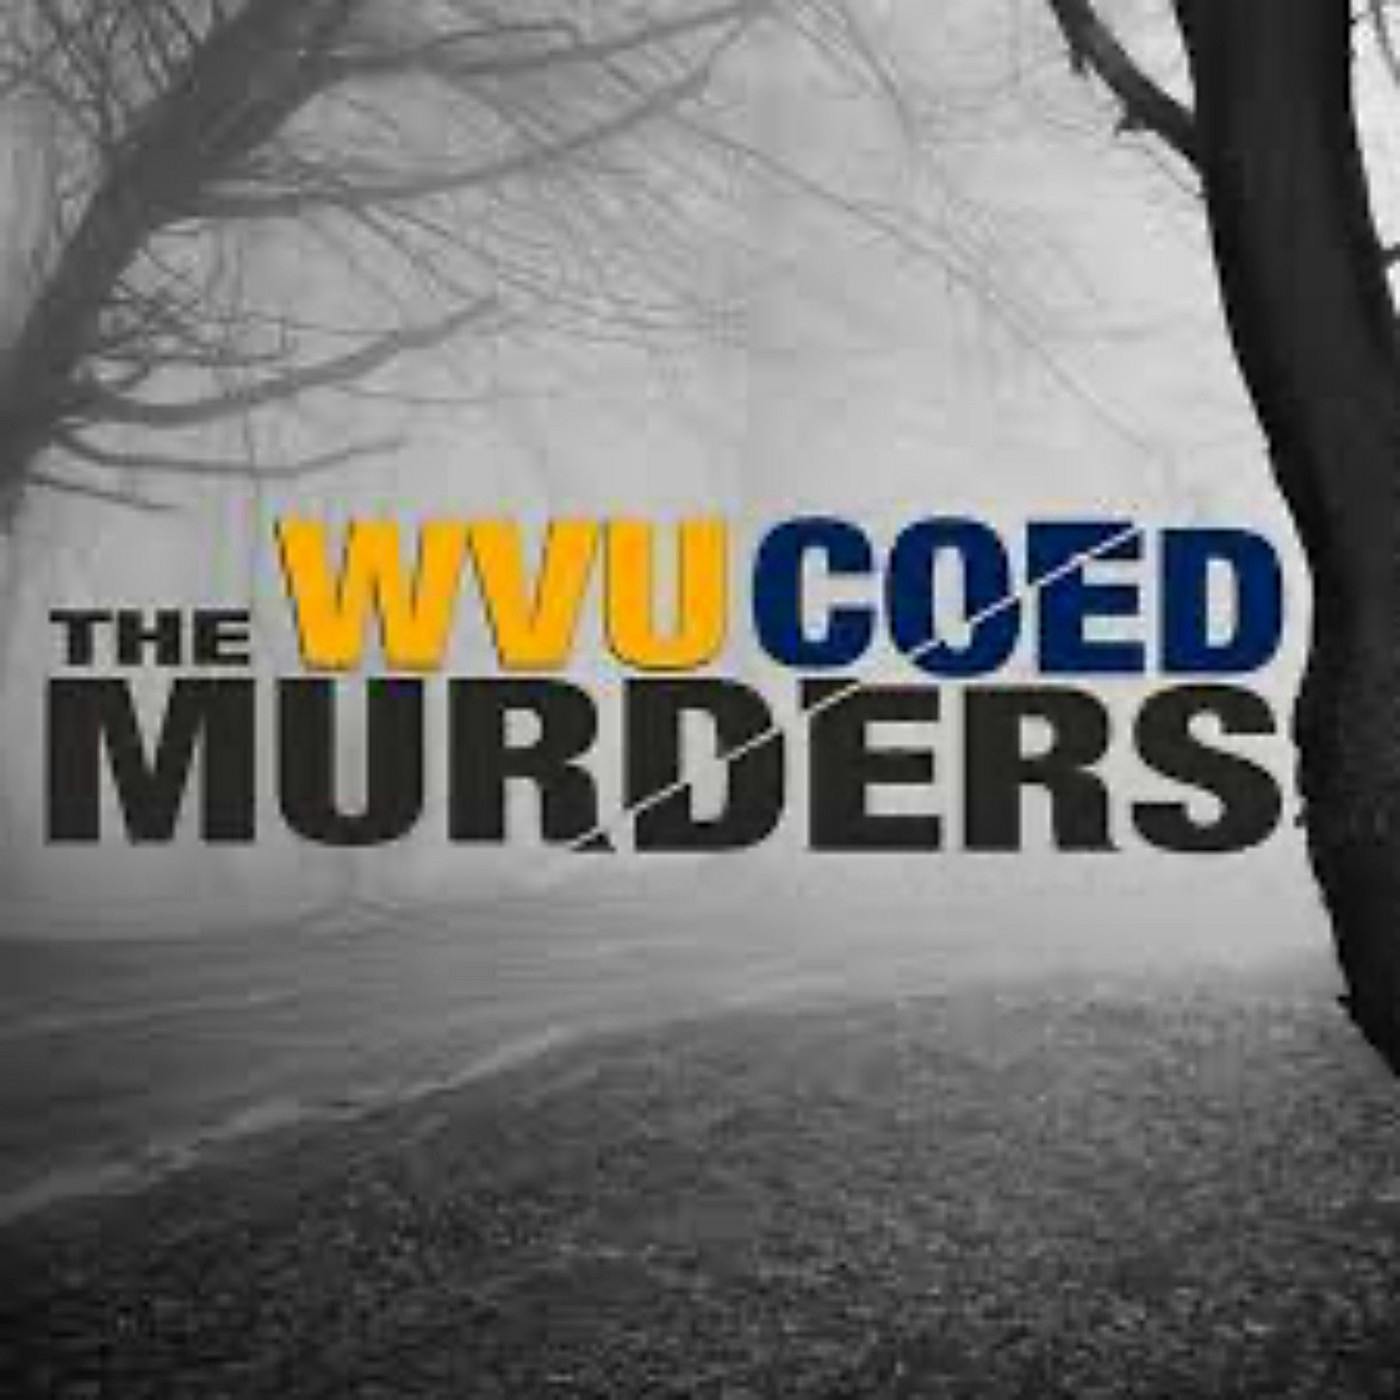 Reasonable Doubt | WVU Coed Murders